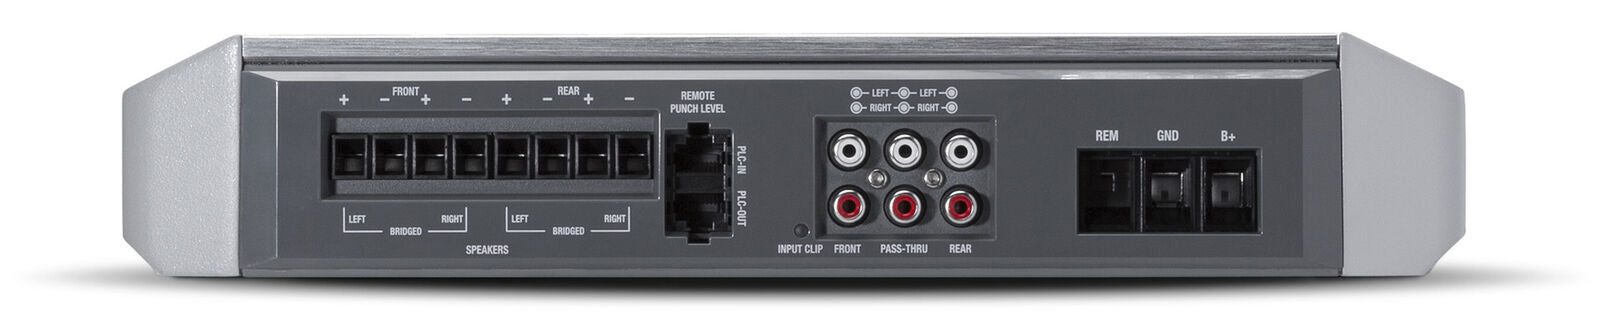 Rockford Fosgate Punch Marine & Powersports 600W 4 Channel Amplifier PM600X4